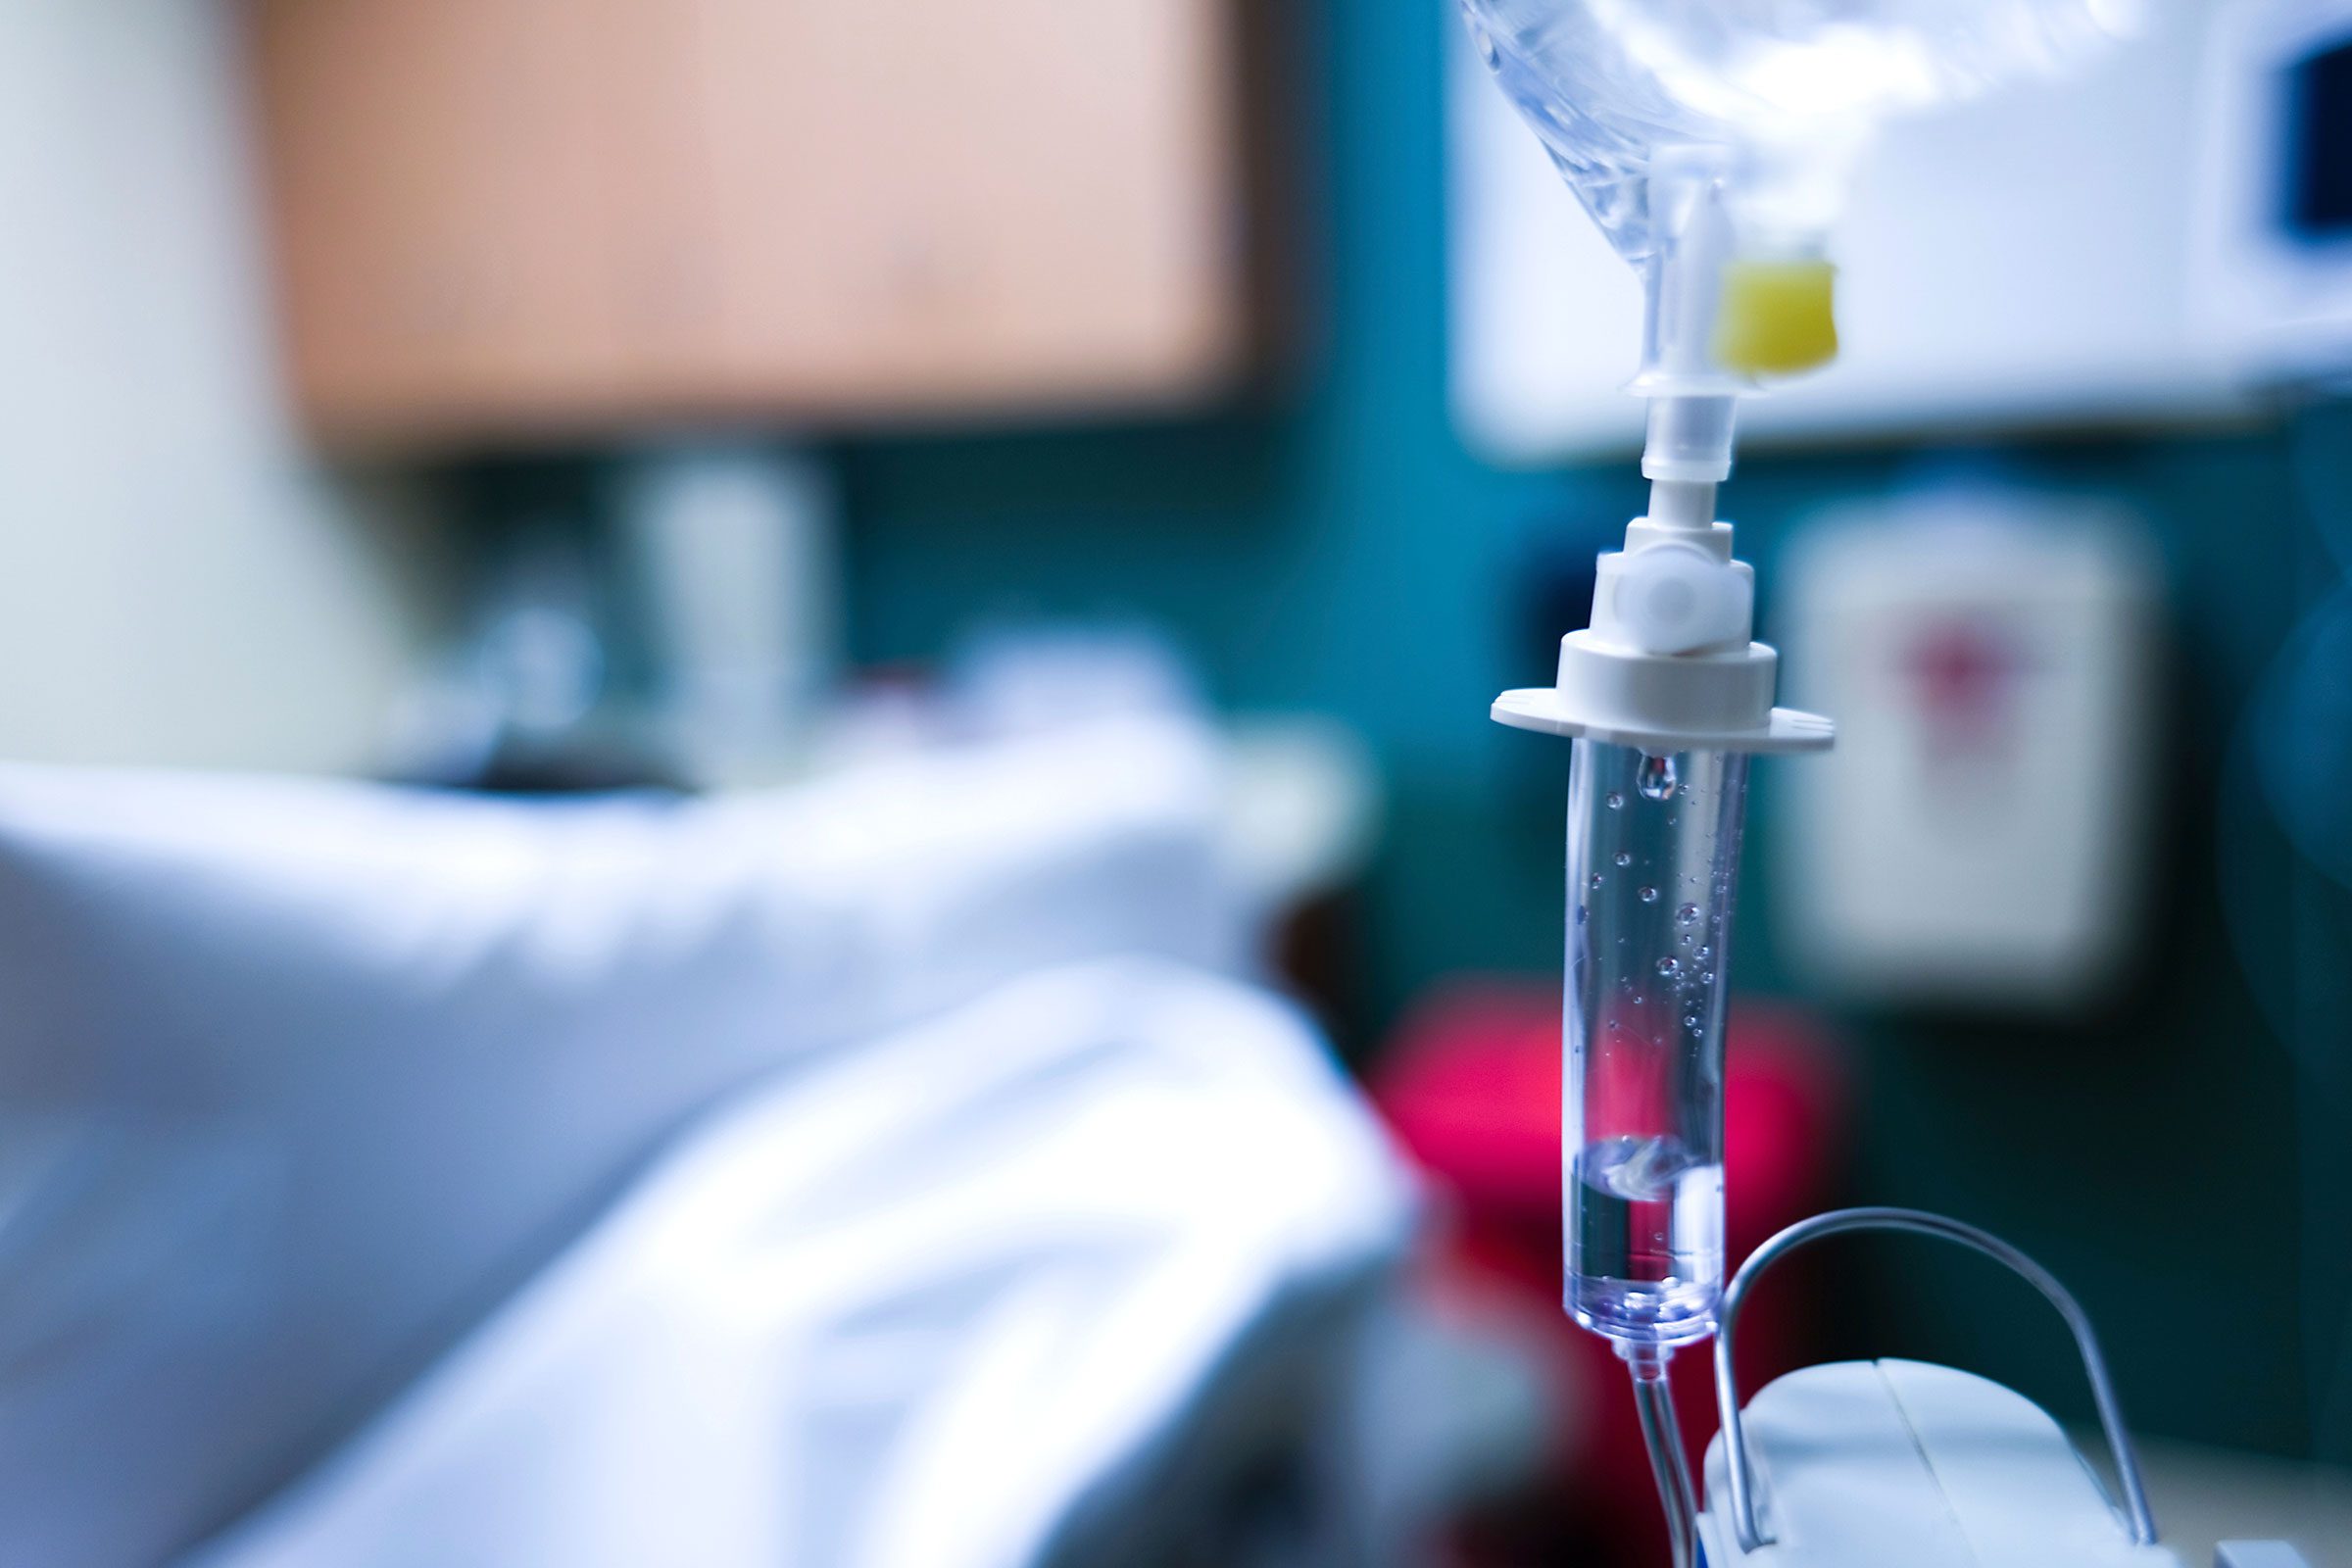 IV drip equipment in hospital